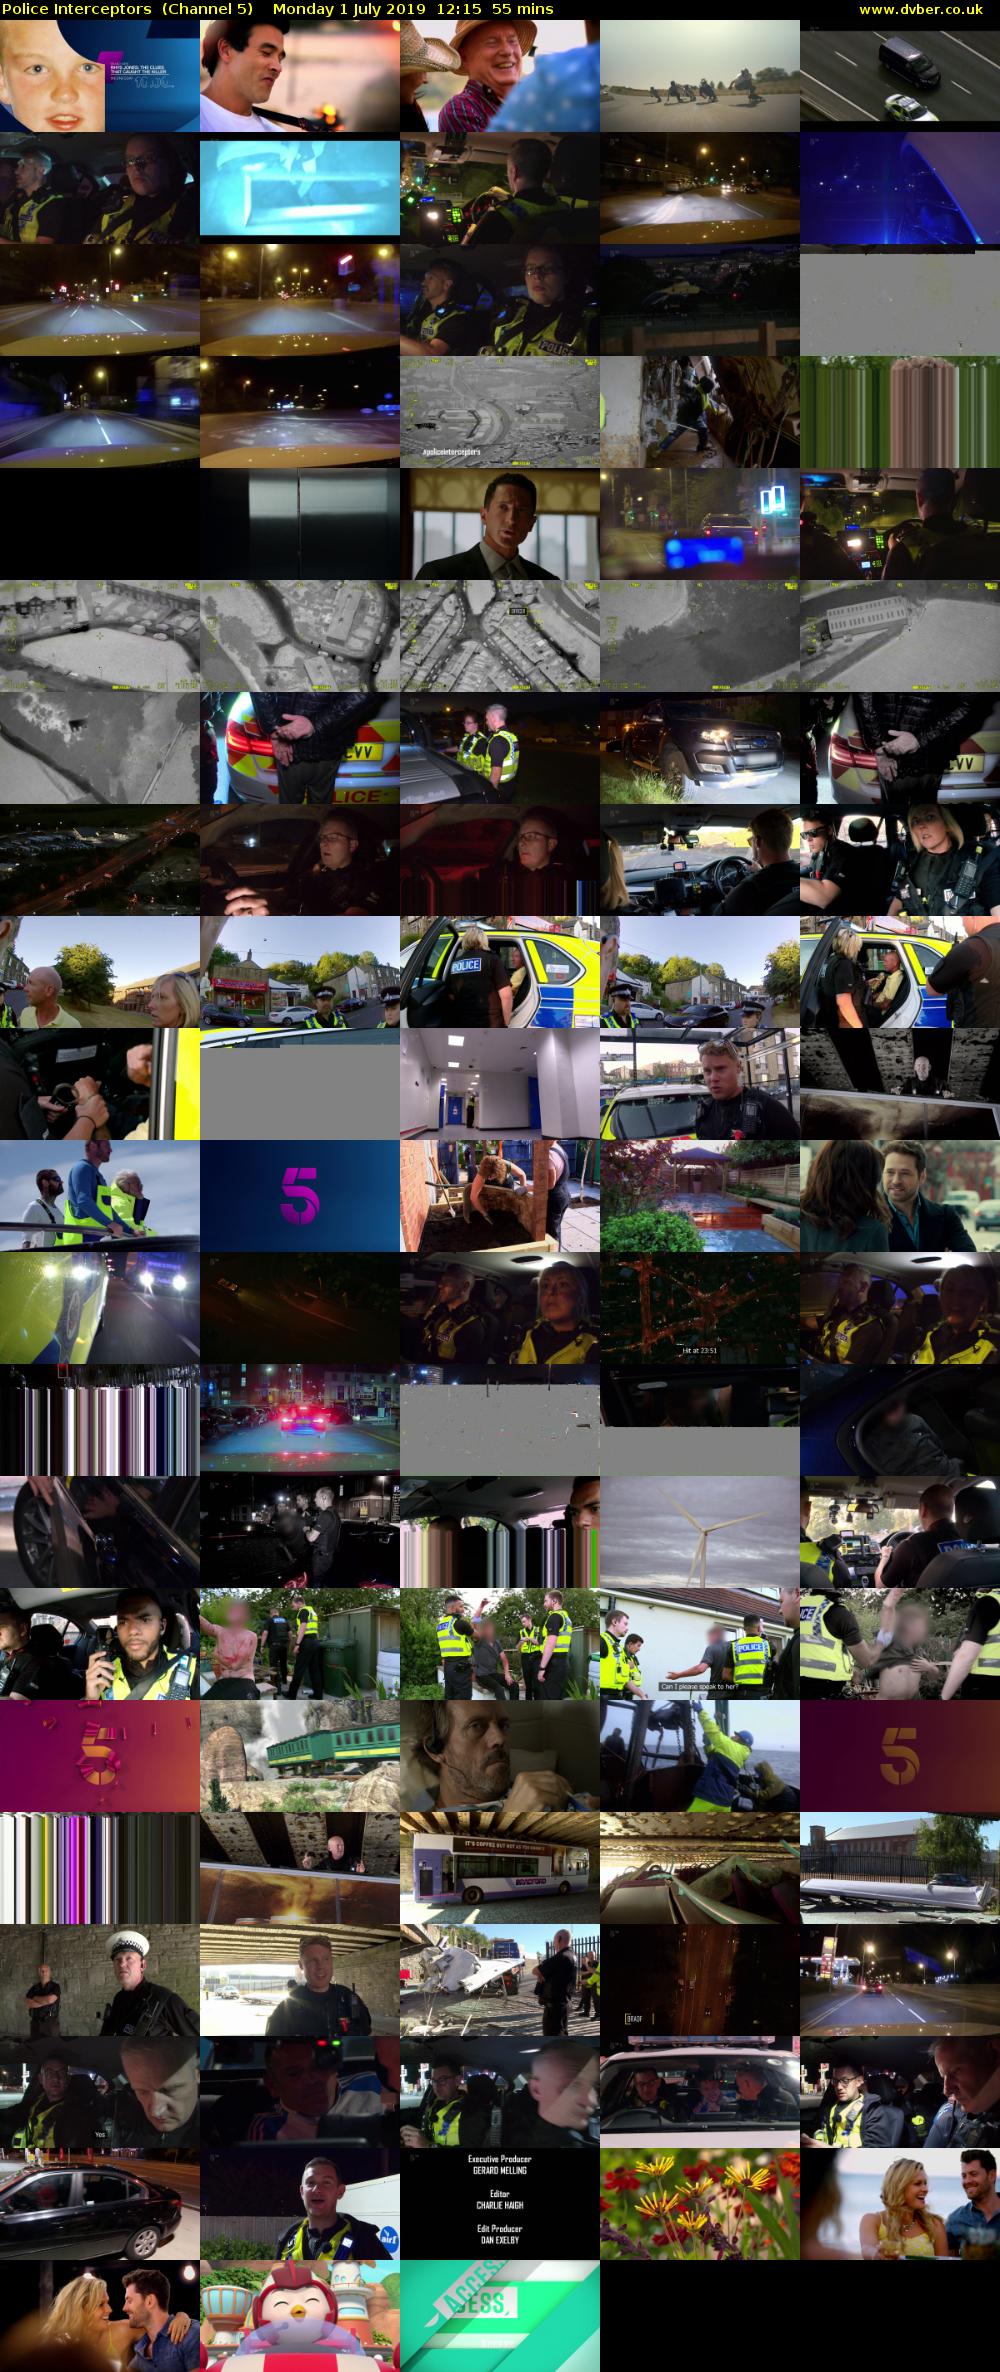 Police Interceptors  (Channel 5) Monday 1 July 2019 12:15 - 13:10